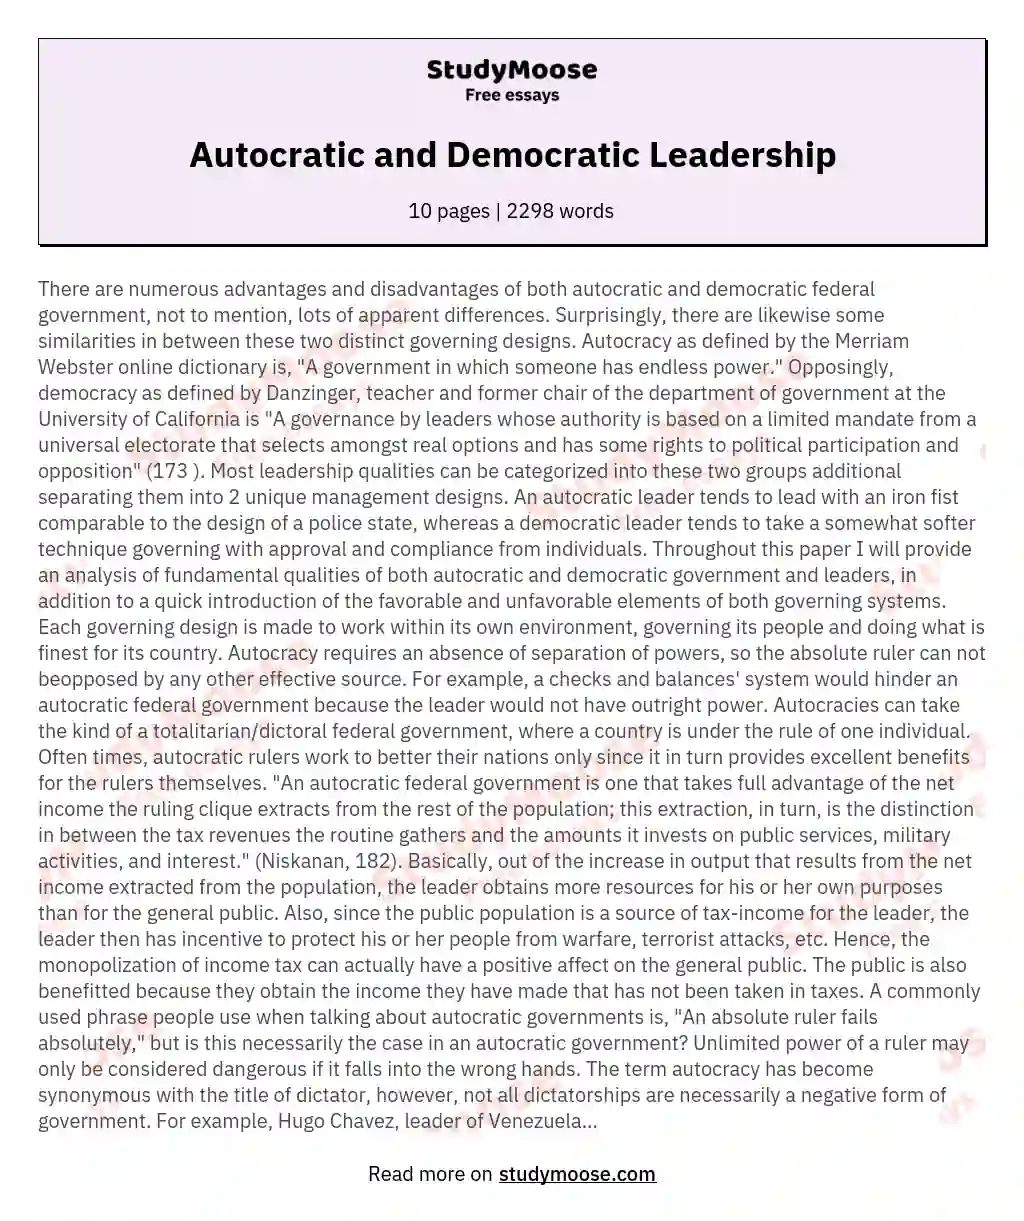 Autocratic and Democratic Leadership essay